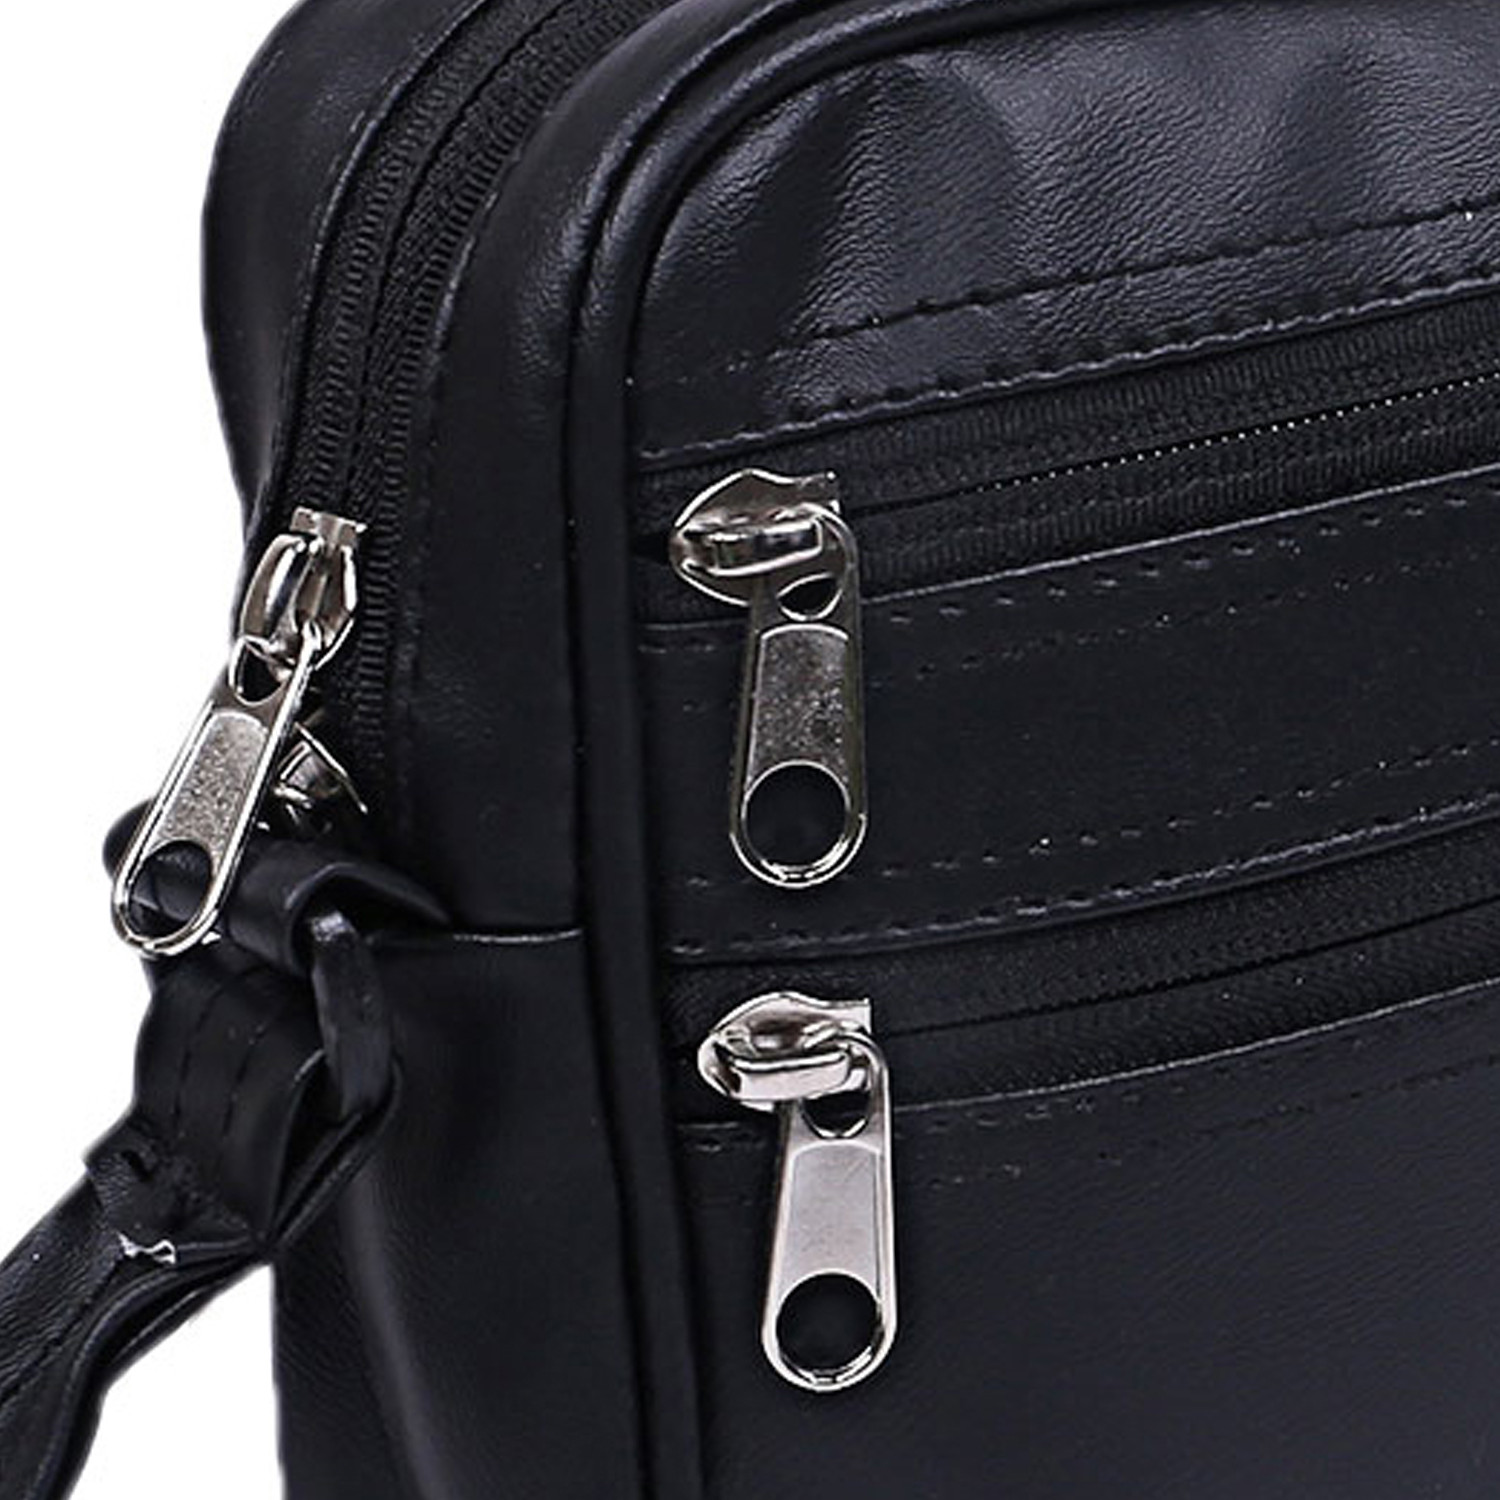 Kuber Industries Multiuses Soft Lether Messenger Bag/Toilerty Bag For Travel, Office, Business (Black)